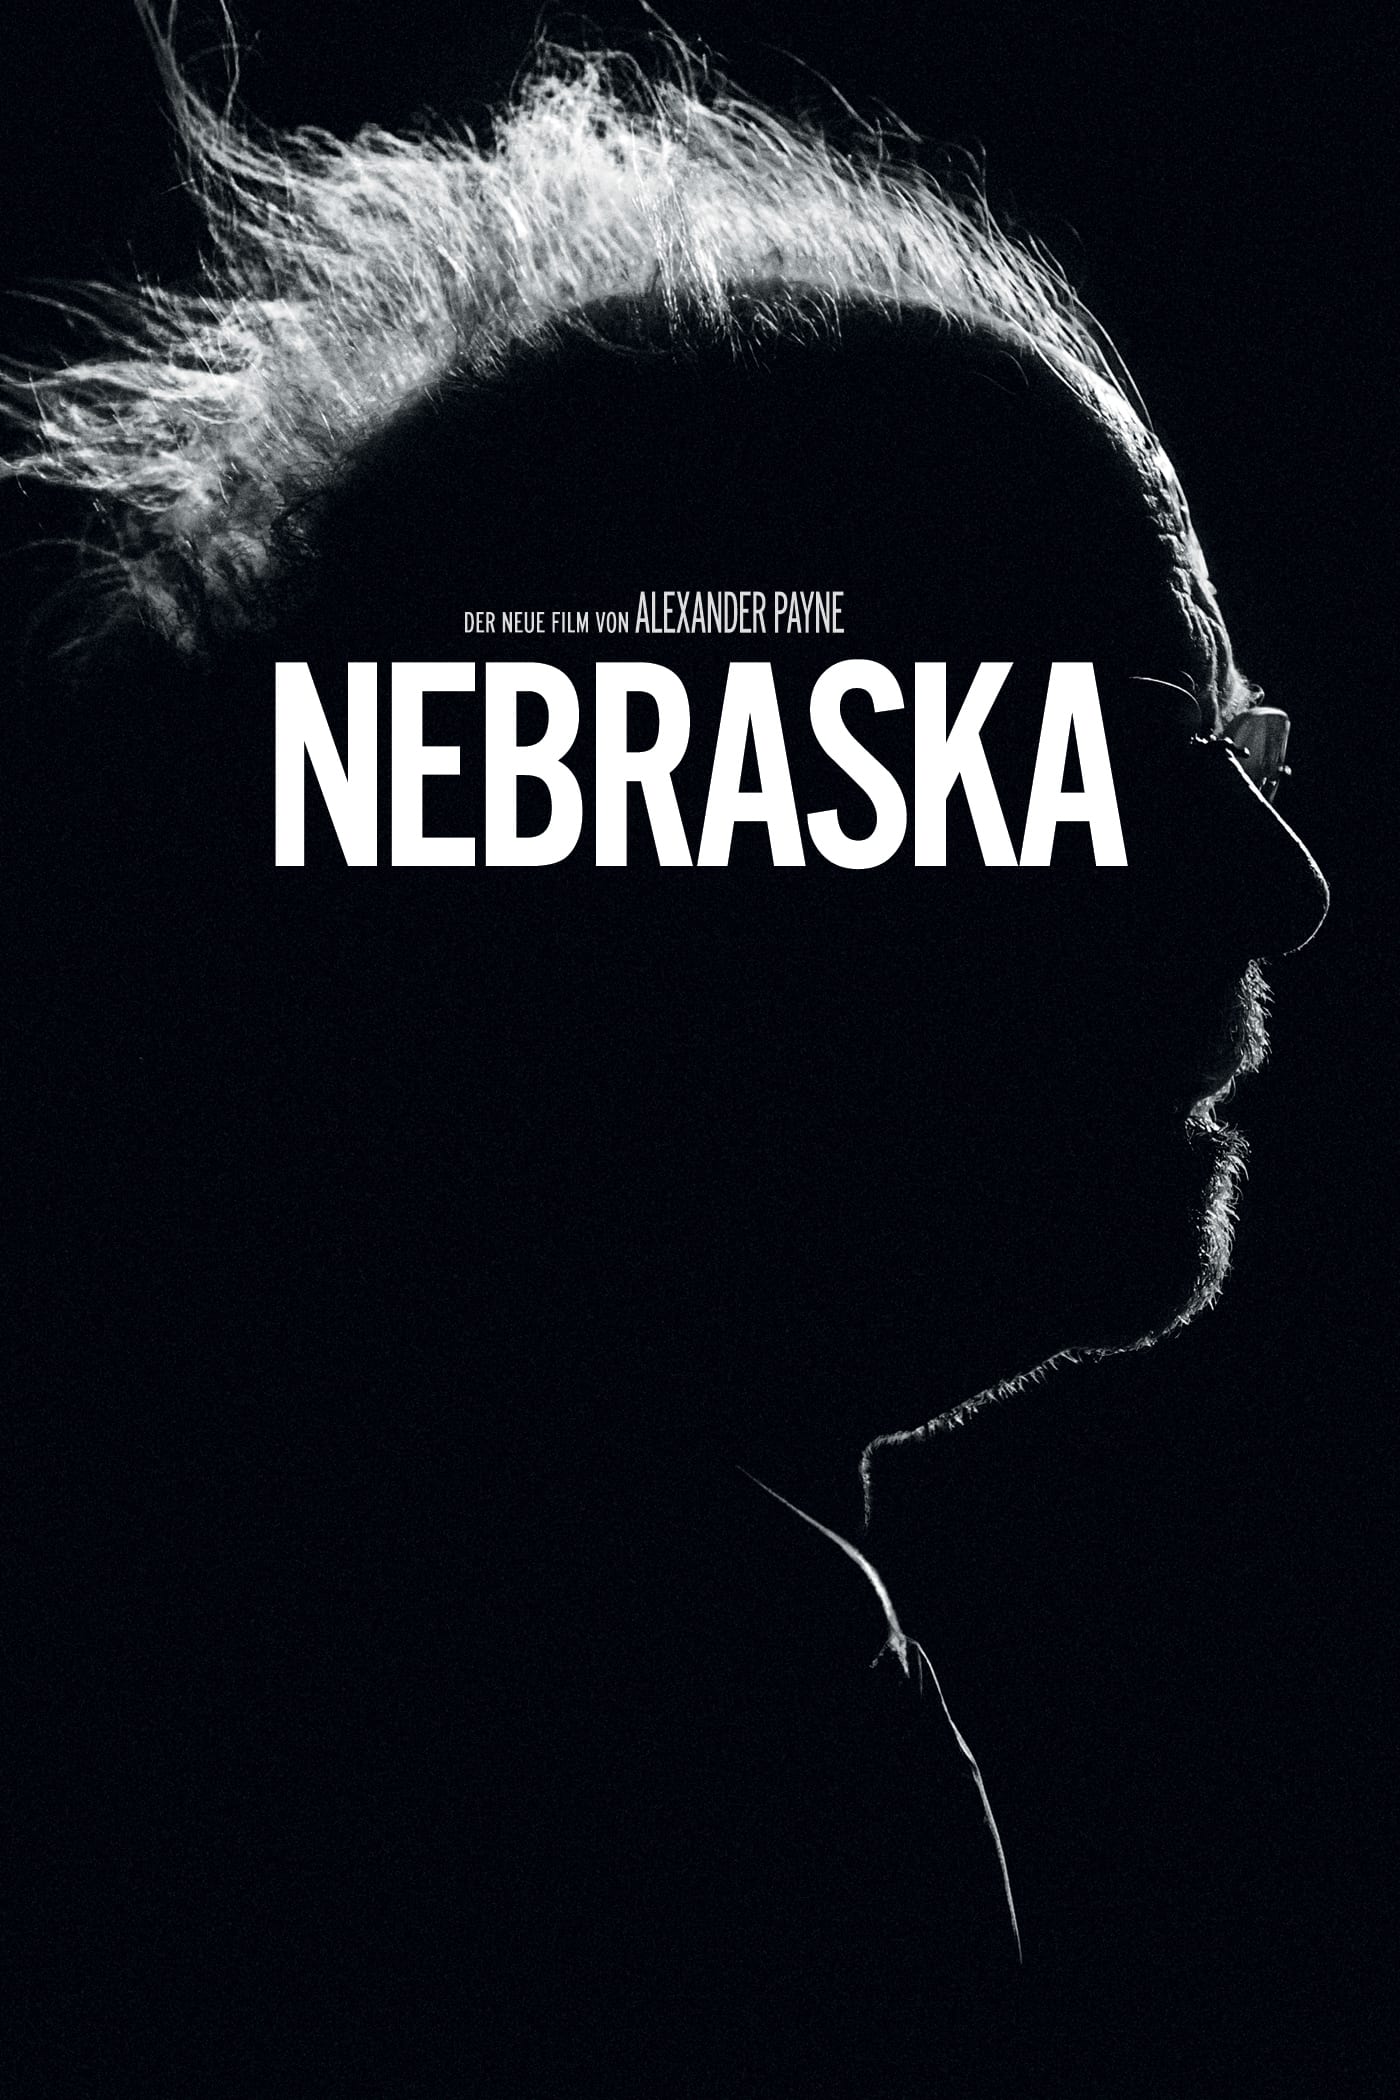 Plakat von "Nebraska"